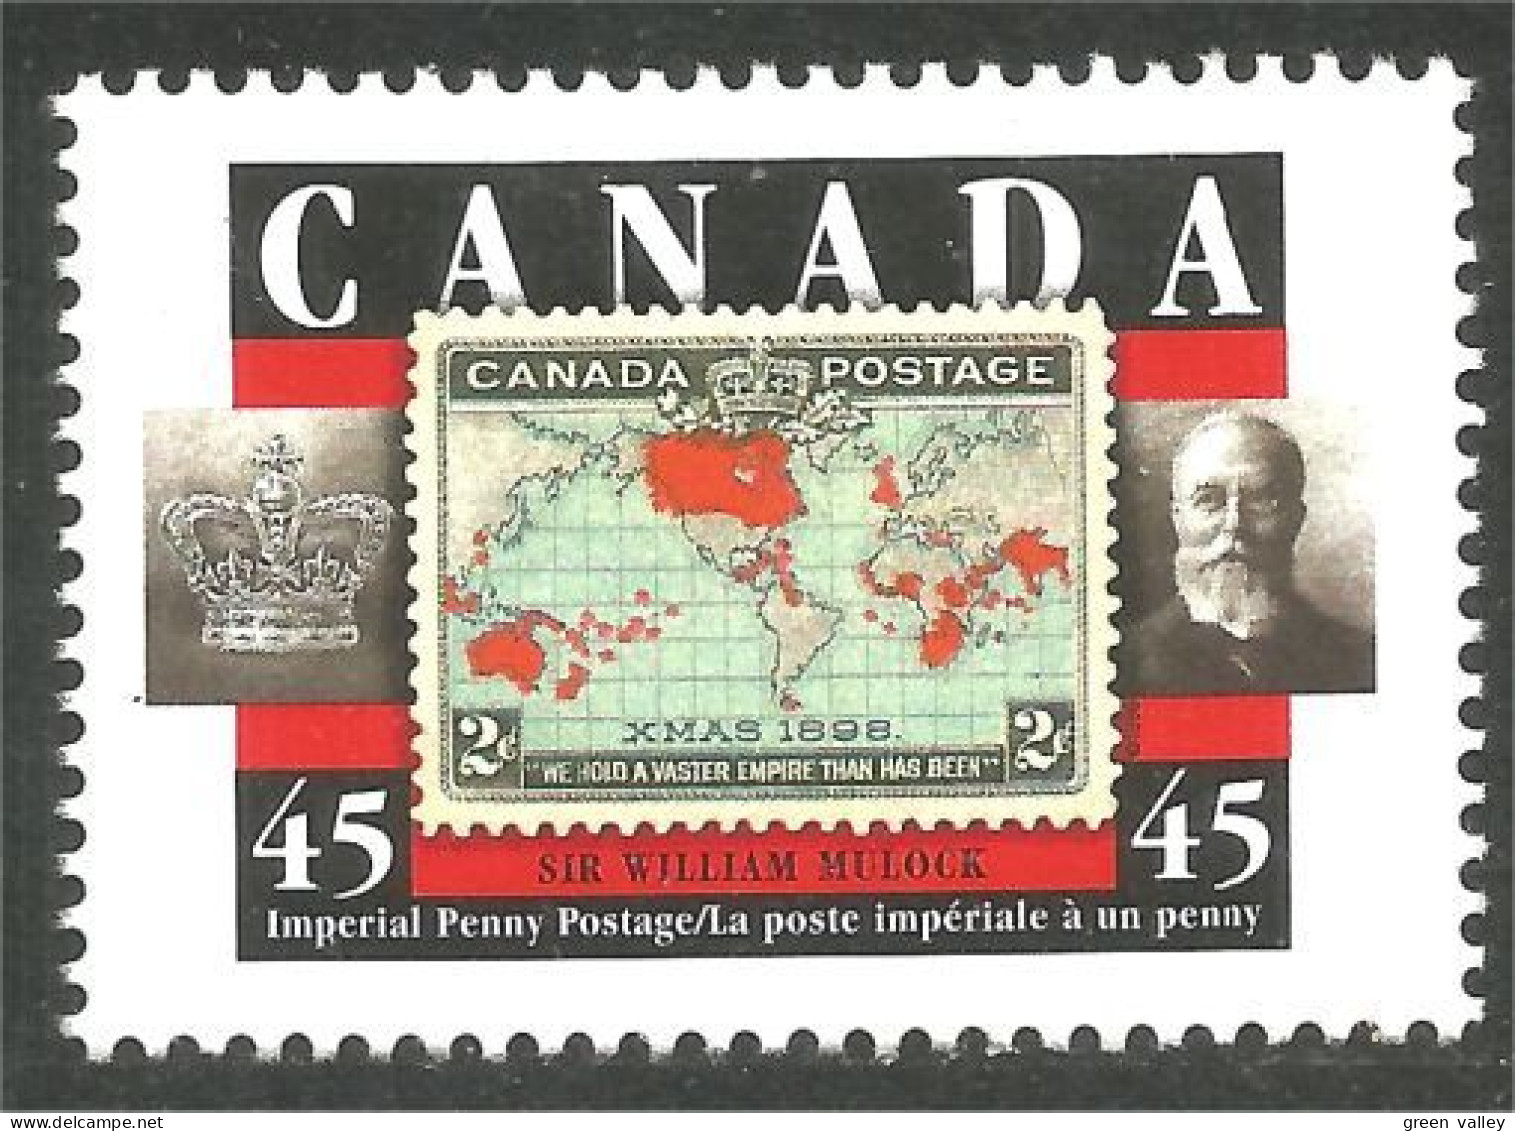 Canada First Christmas Stamp Premier Timbre De Noel 1898 MNH ** Neuf SC (C17-22b) - Navidad